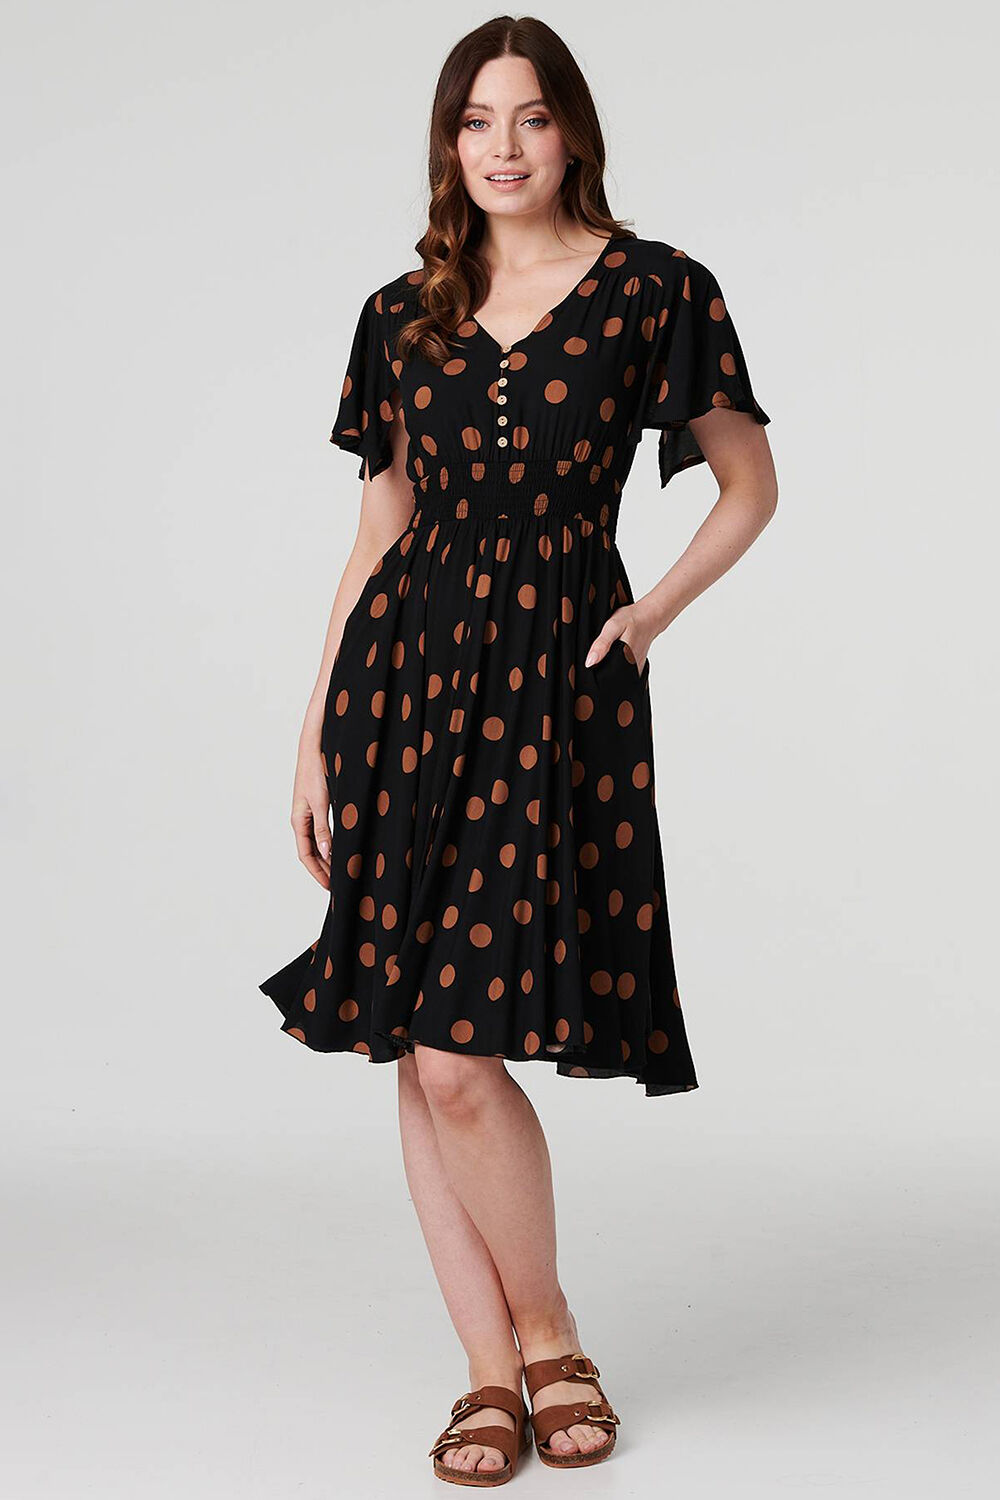 Izabel London Black - Polka Dot Fit Flare Short Dress, Size: 12